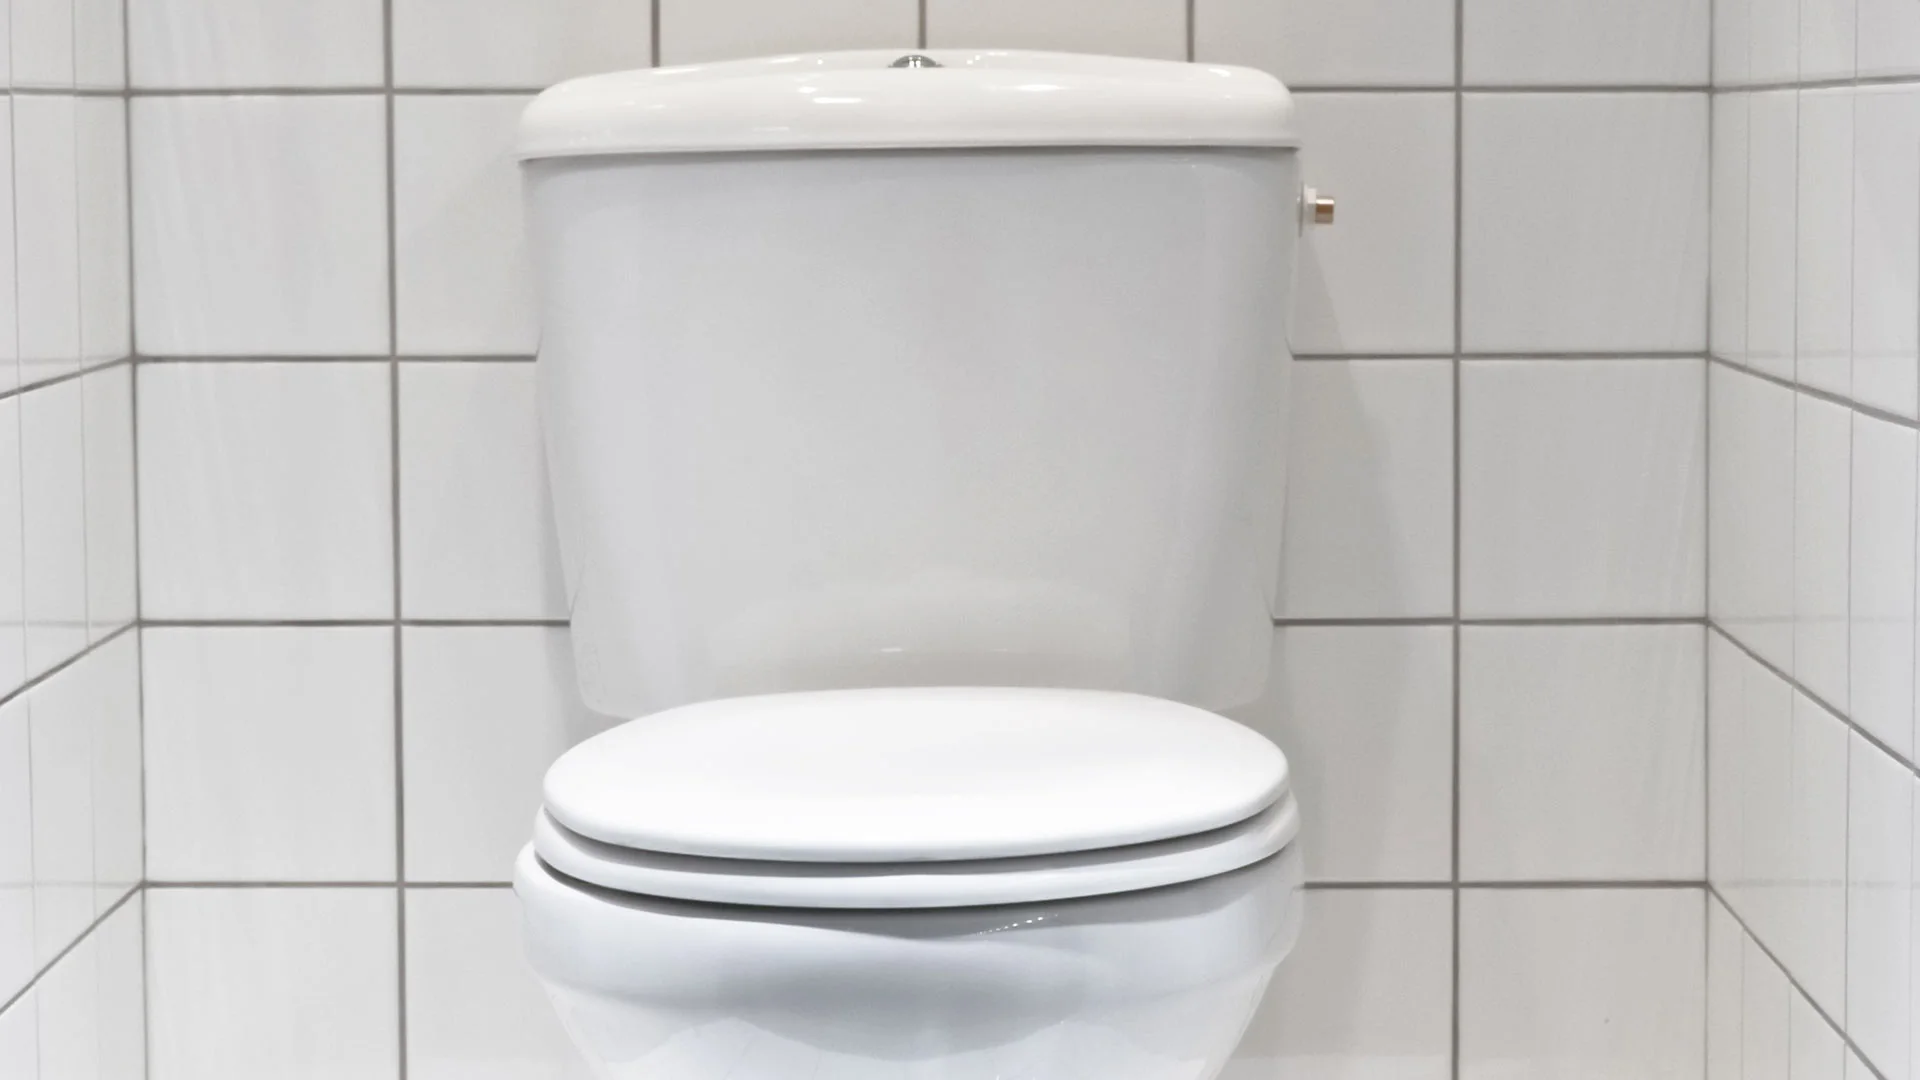 High-Efficiency Toilets vs. Regular Toilets